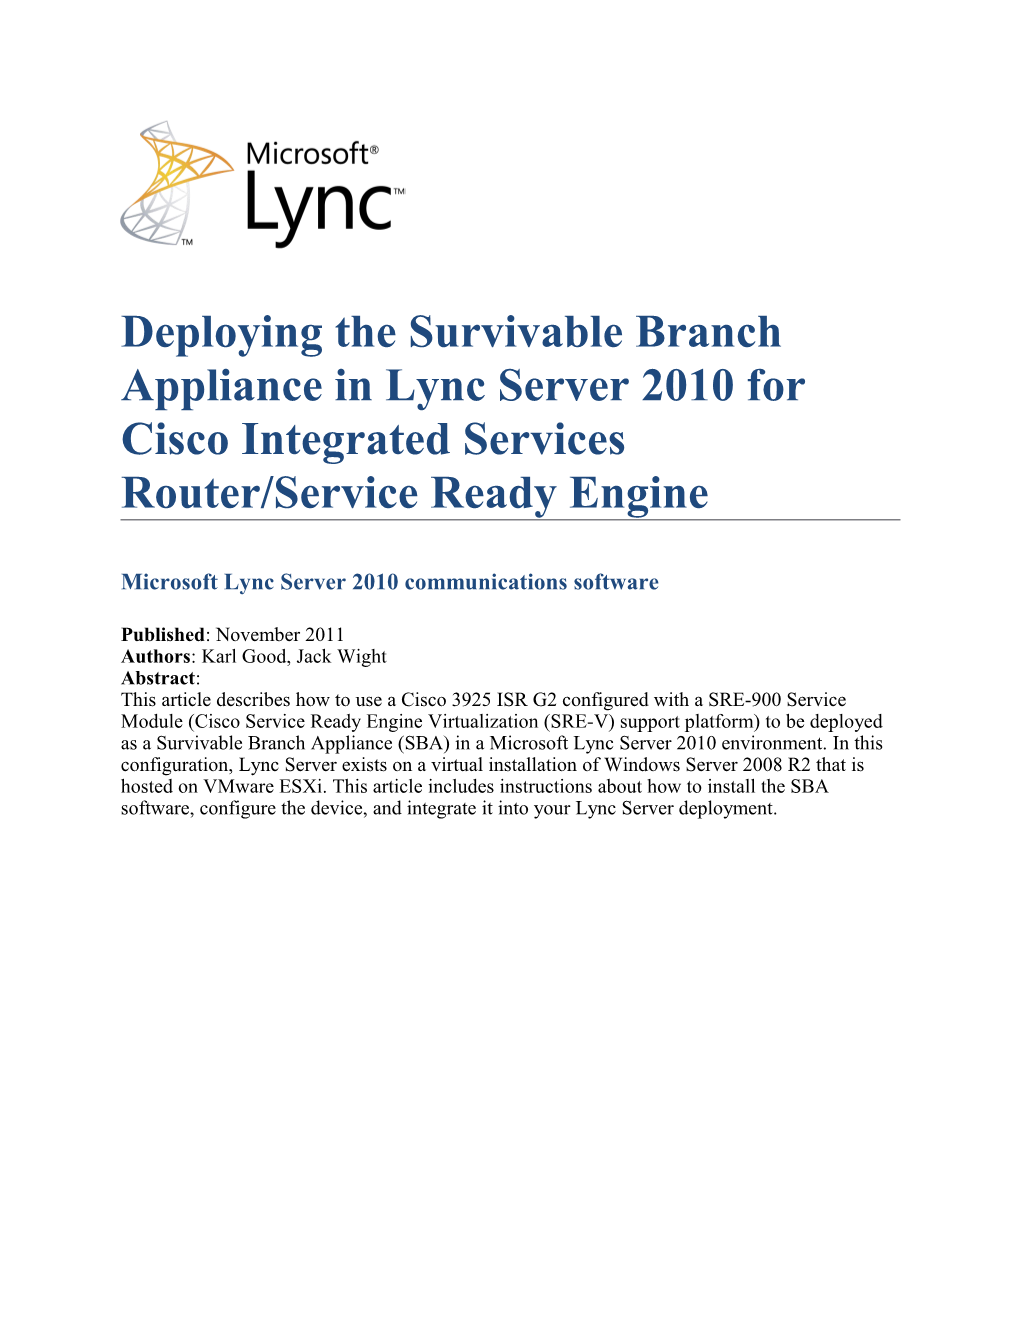 Microsoft Lync Server 2010 Communications Software